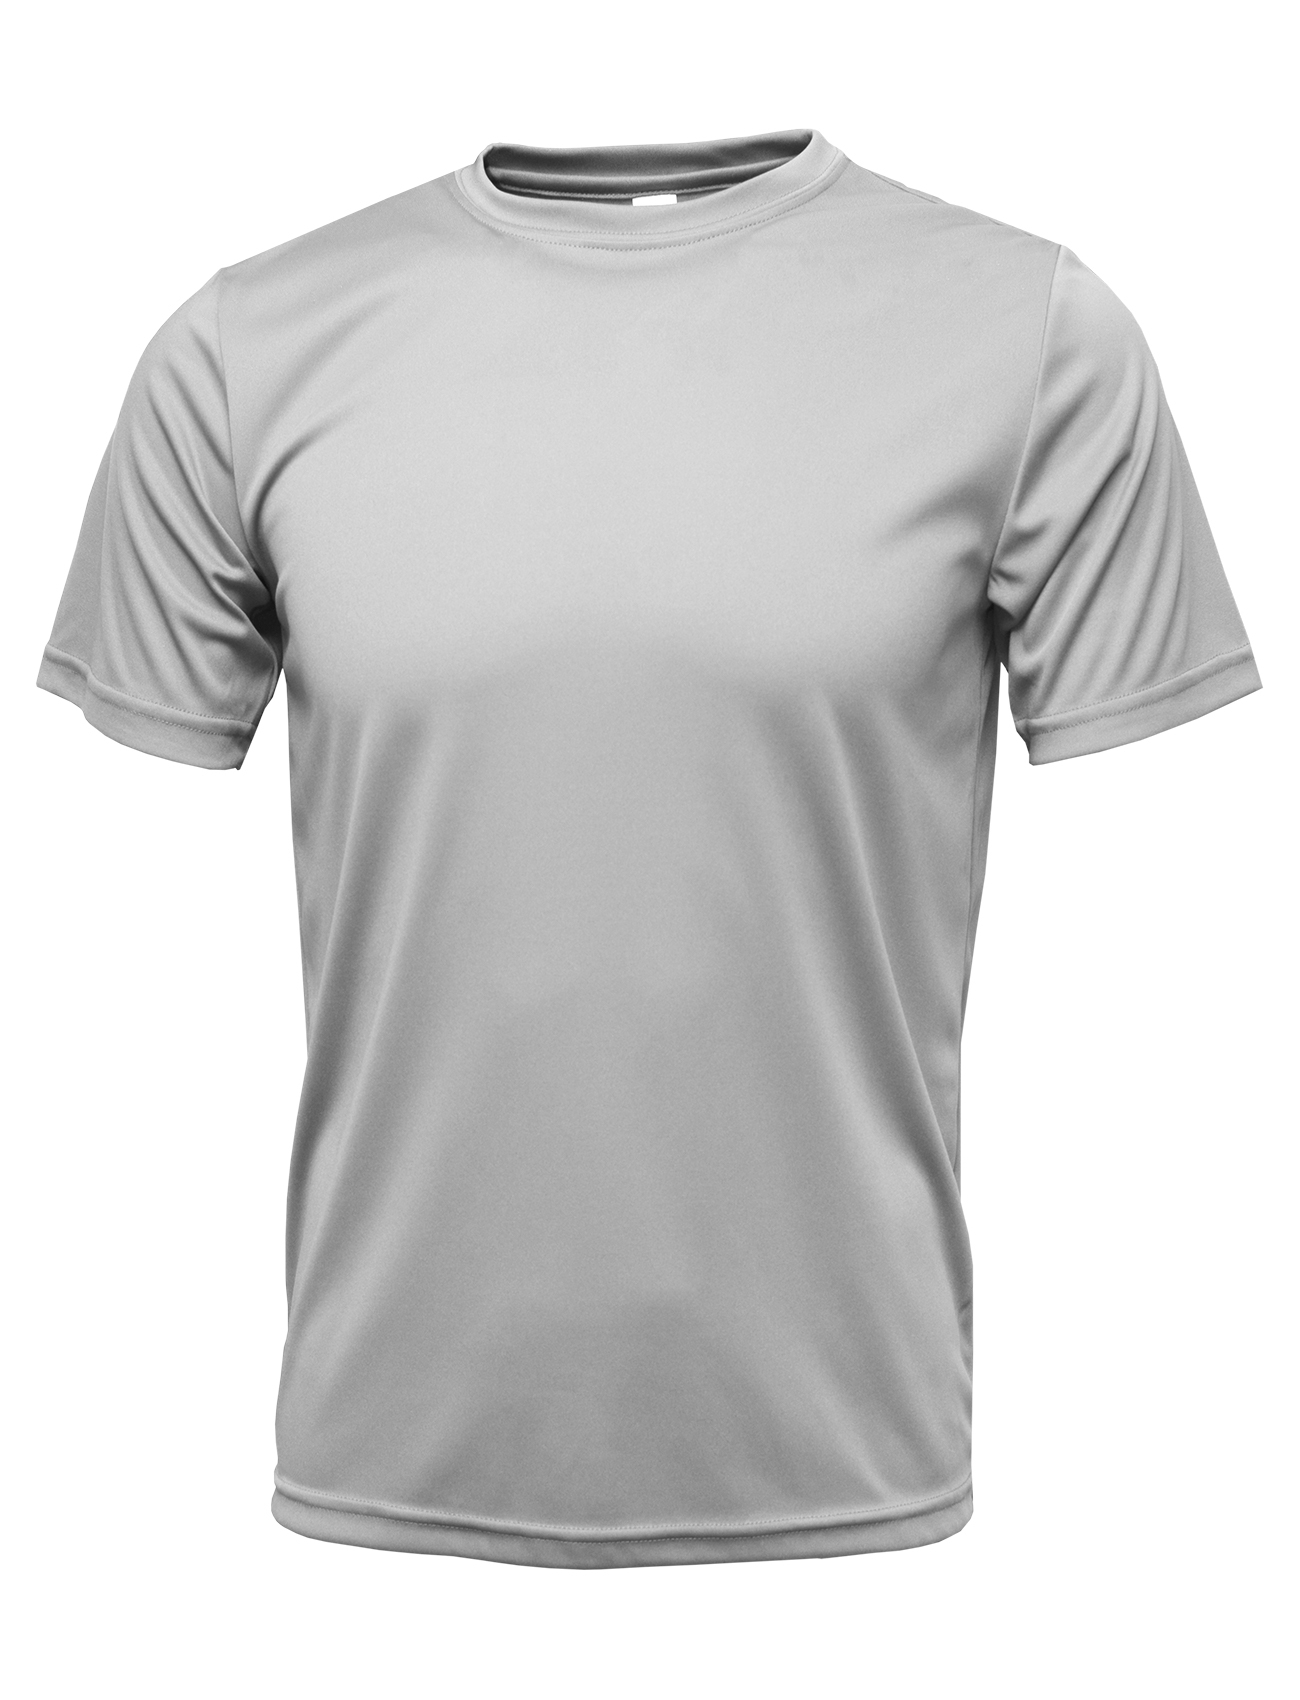 BAW Athletic Wear XT76 / XT76H - Men' s Xtreme-Tek T-Shirt